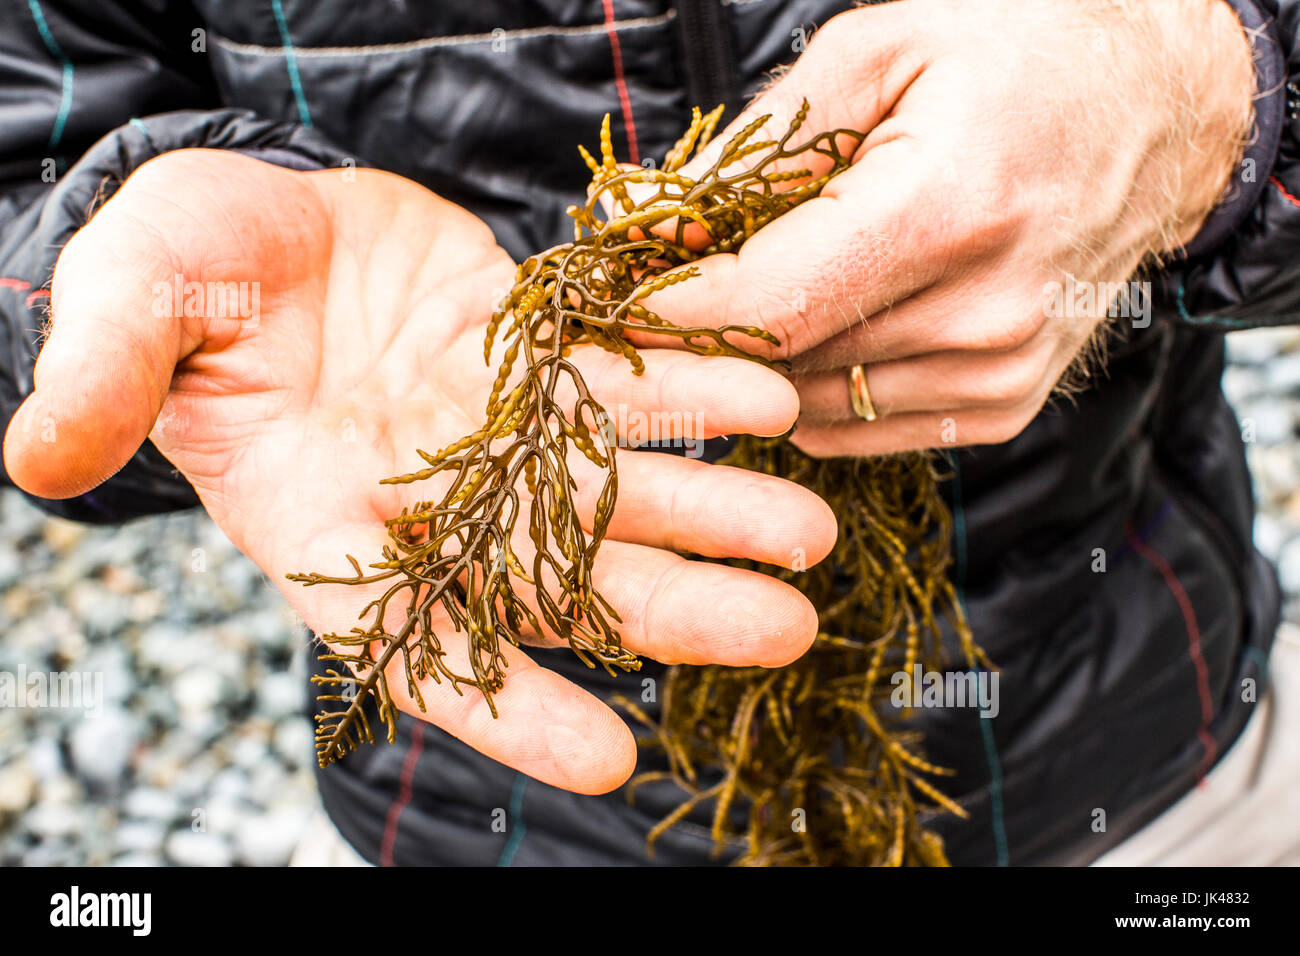 Hands of Caucasian man holding seaweed Stock Photo